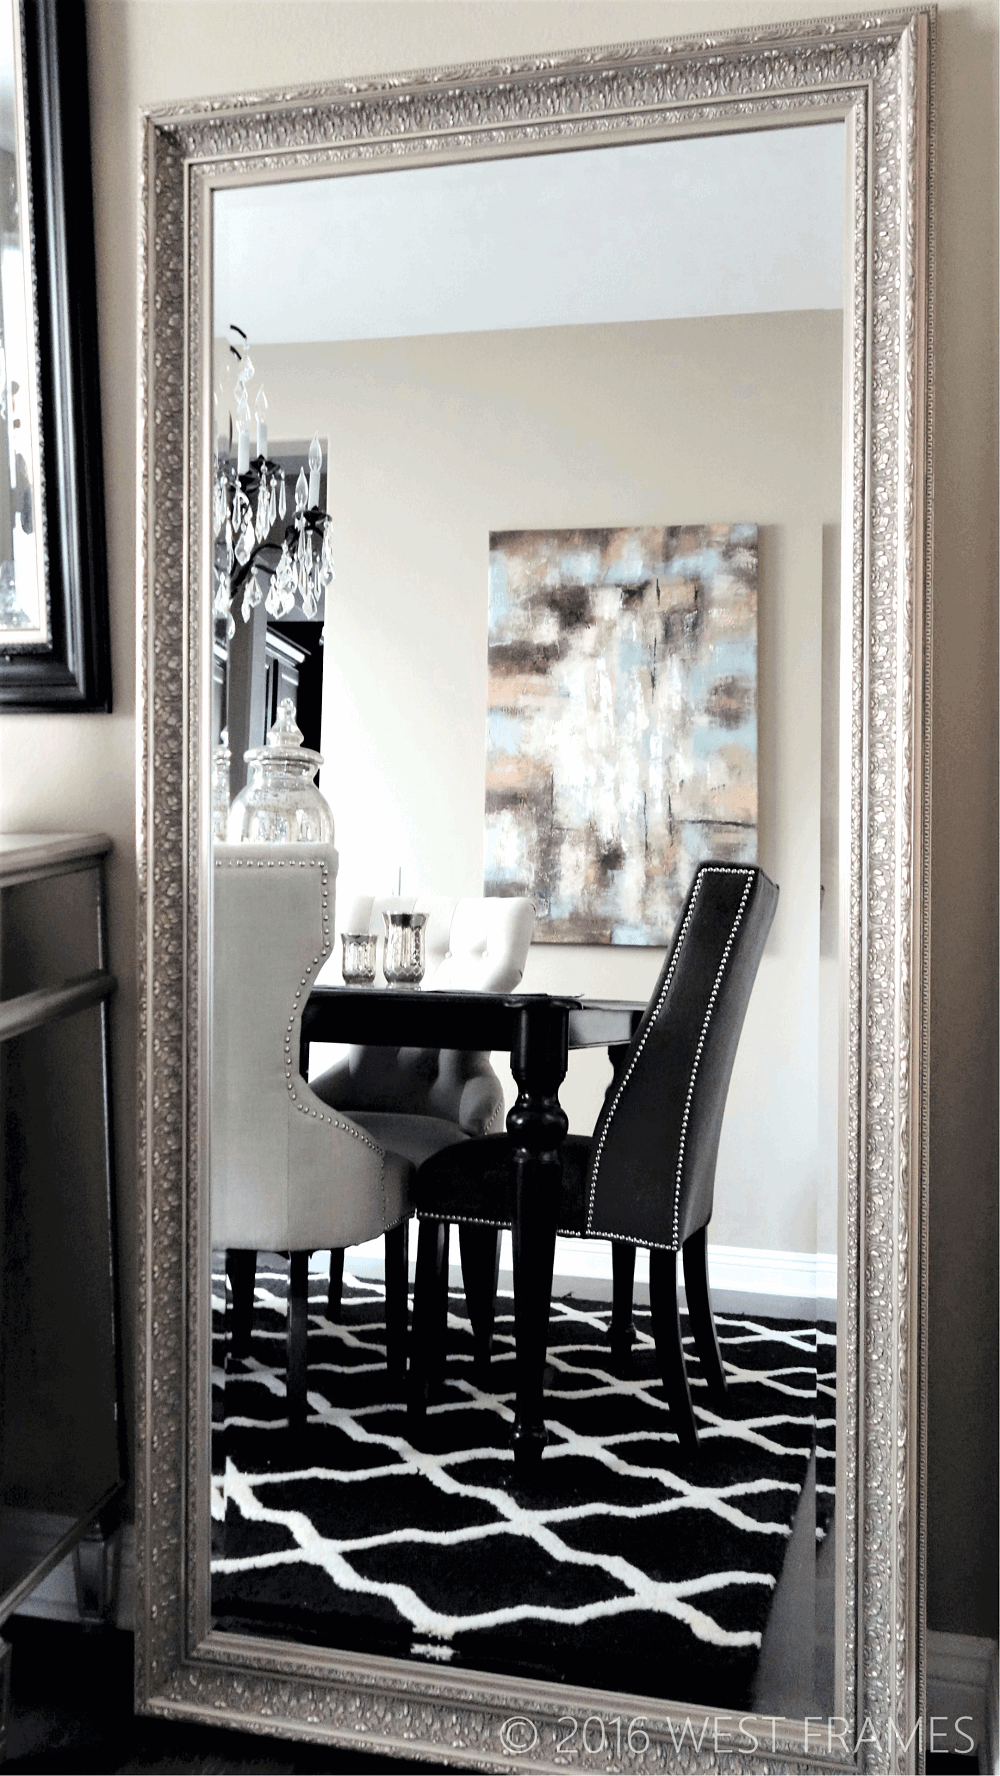 Elegance French Ornate Embossed Wood Framed Floor Mirror Champagne Silver Gold - West Frames